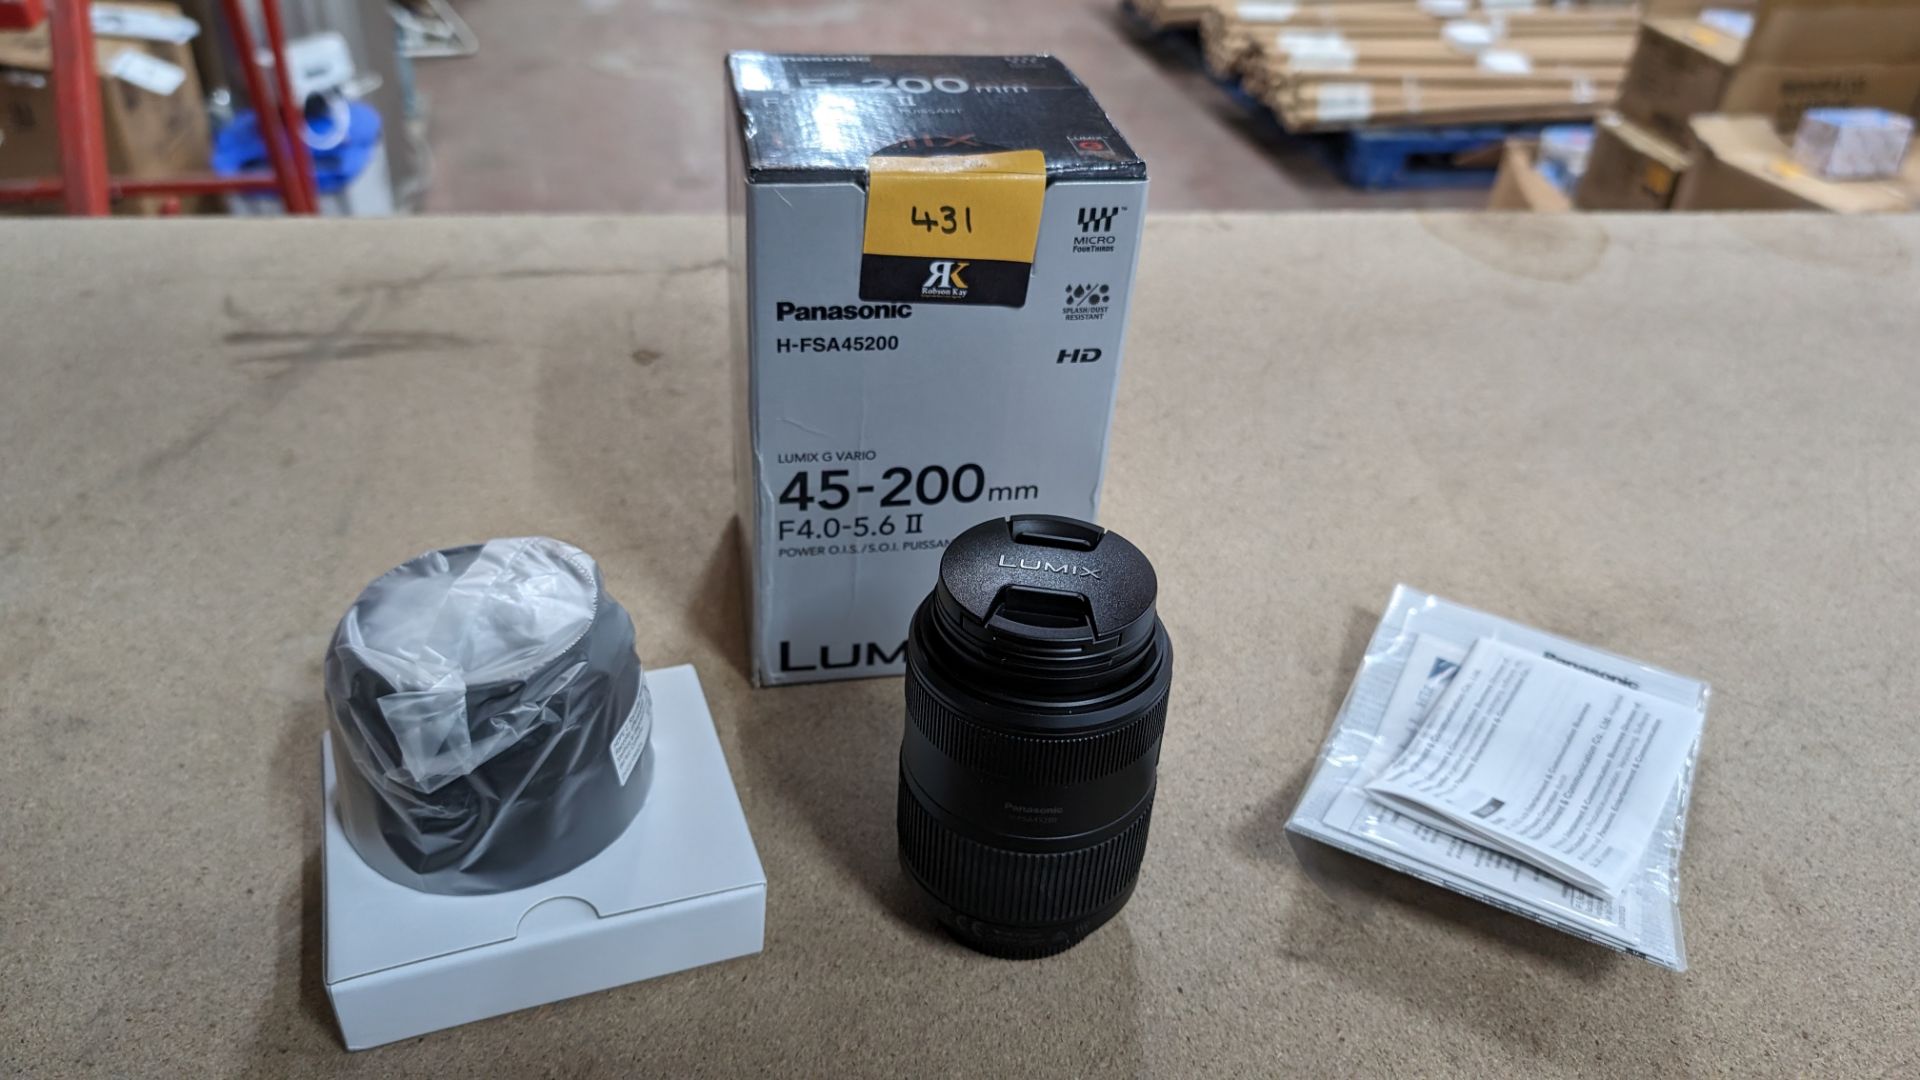 Panasonic Lumix G Vario 45-200mm lens, model H-FSA45200, f4.0-5.6 II - Image 3 of 10